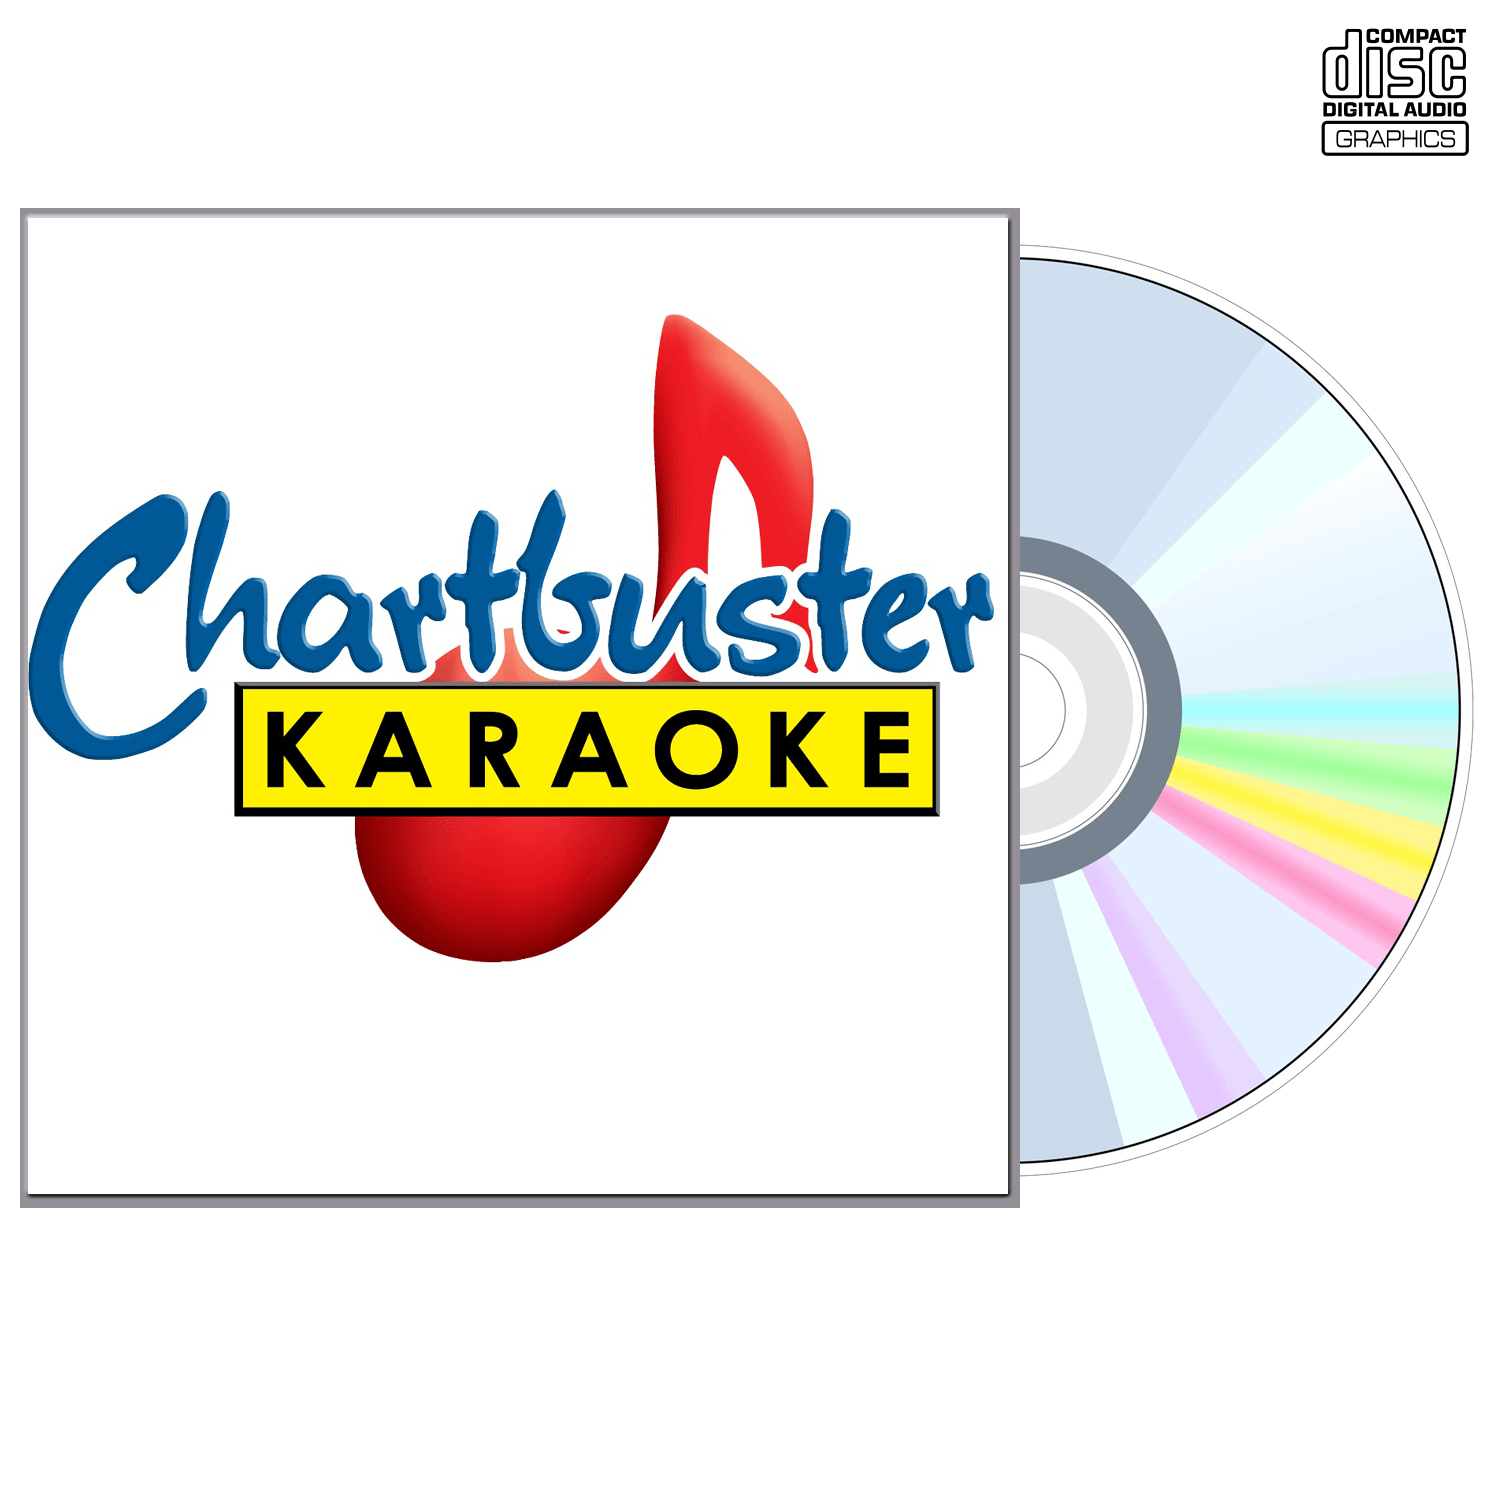 Seldom Scene - CD+G - Chartbuster Karaoke - Karaoke Home Entertainment